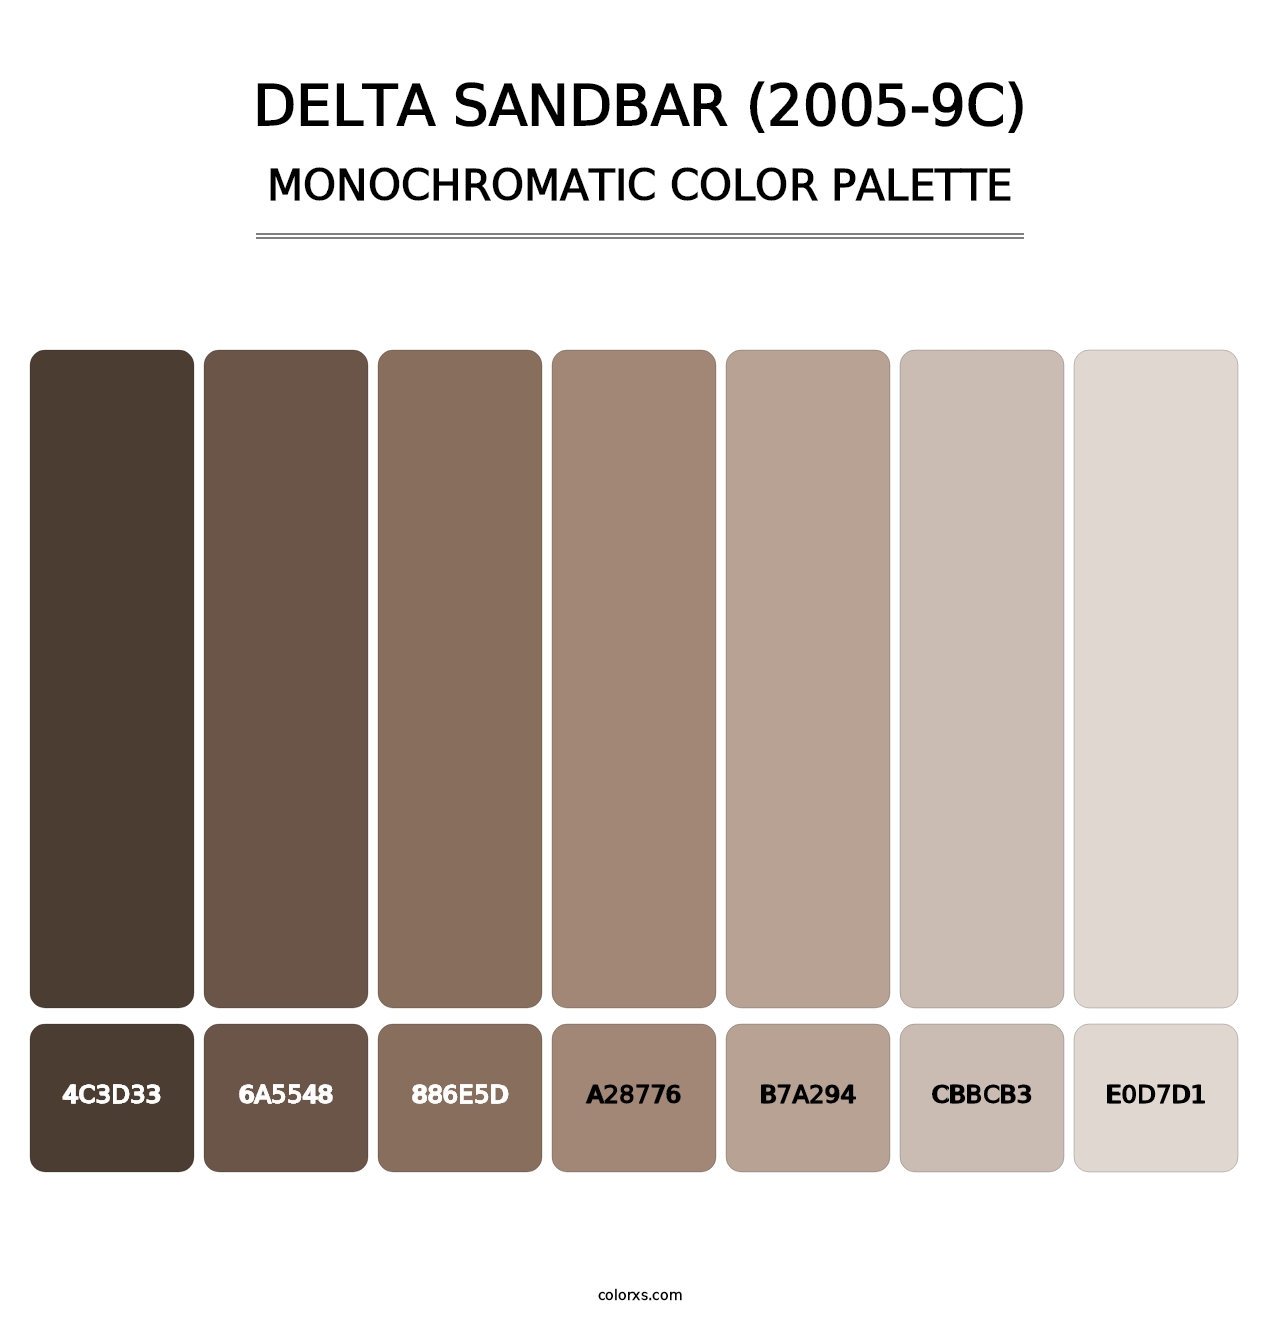 Delta Sandbar (2005-9C) - Monochromatic Color Palette